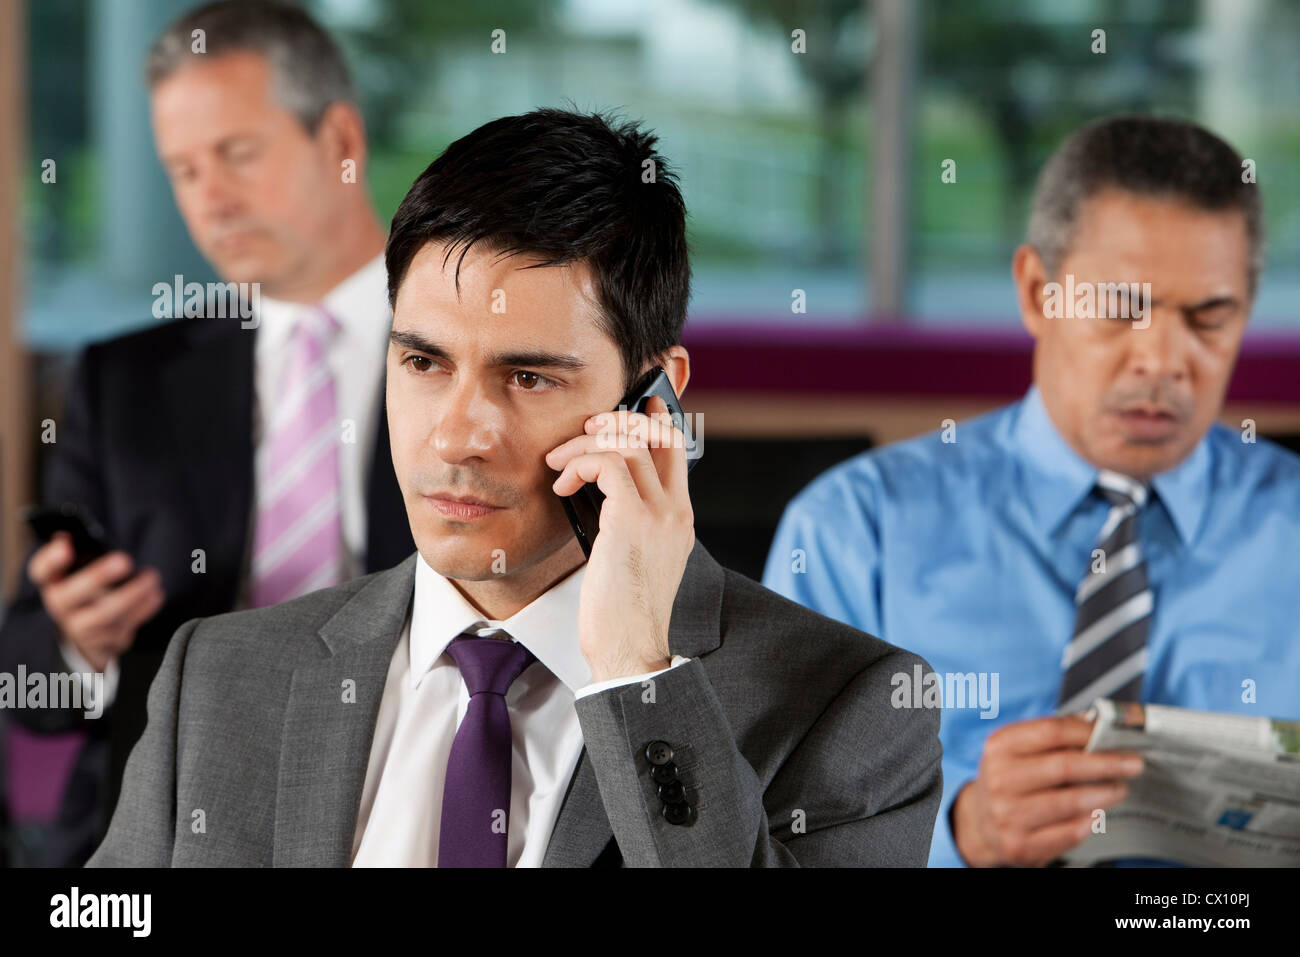 Businessman on telephone call Stock Photo